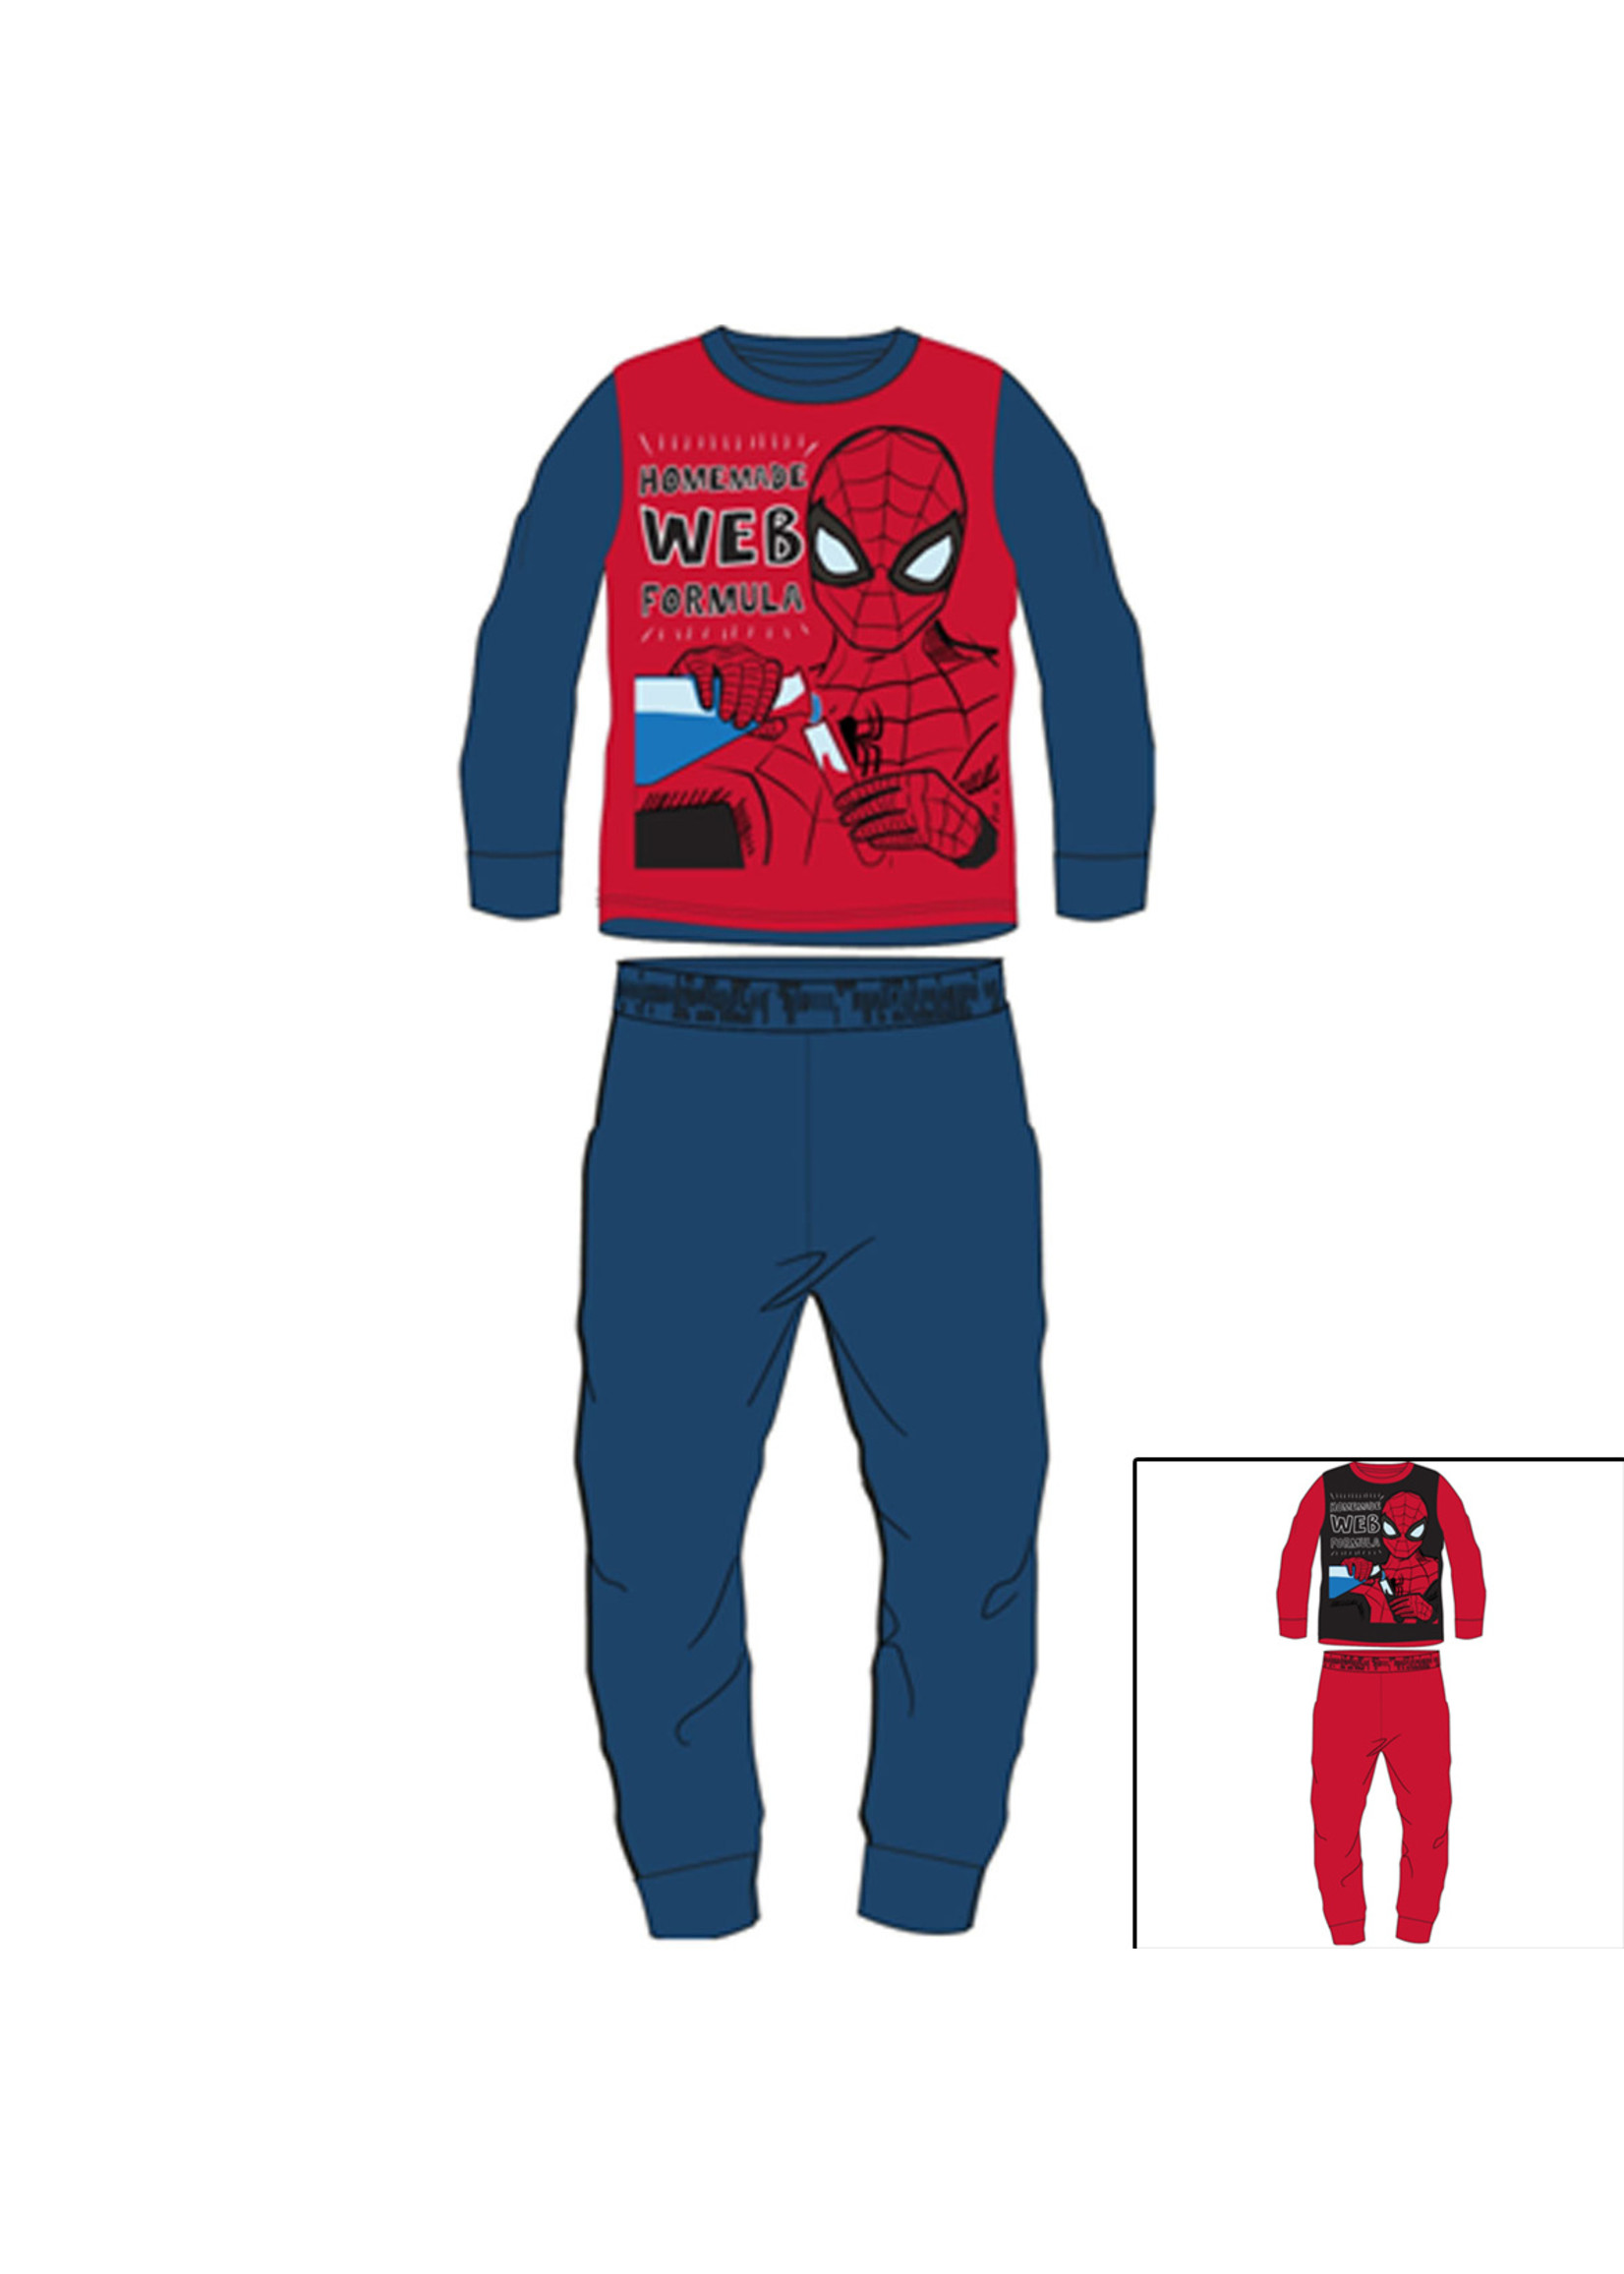 Marvel Spiderman Pajamas from Marvel blue